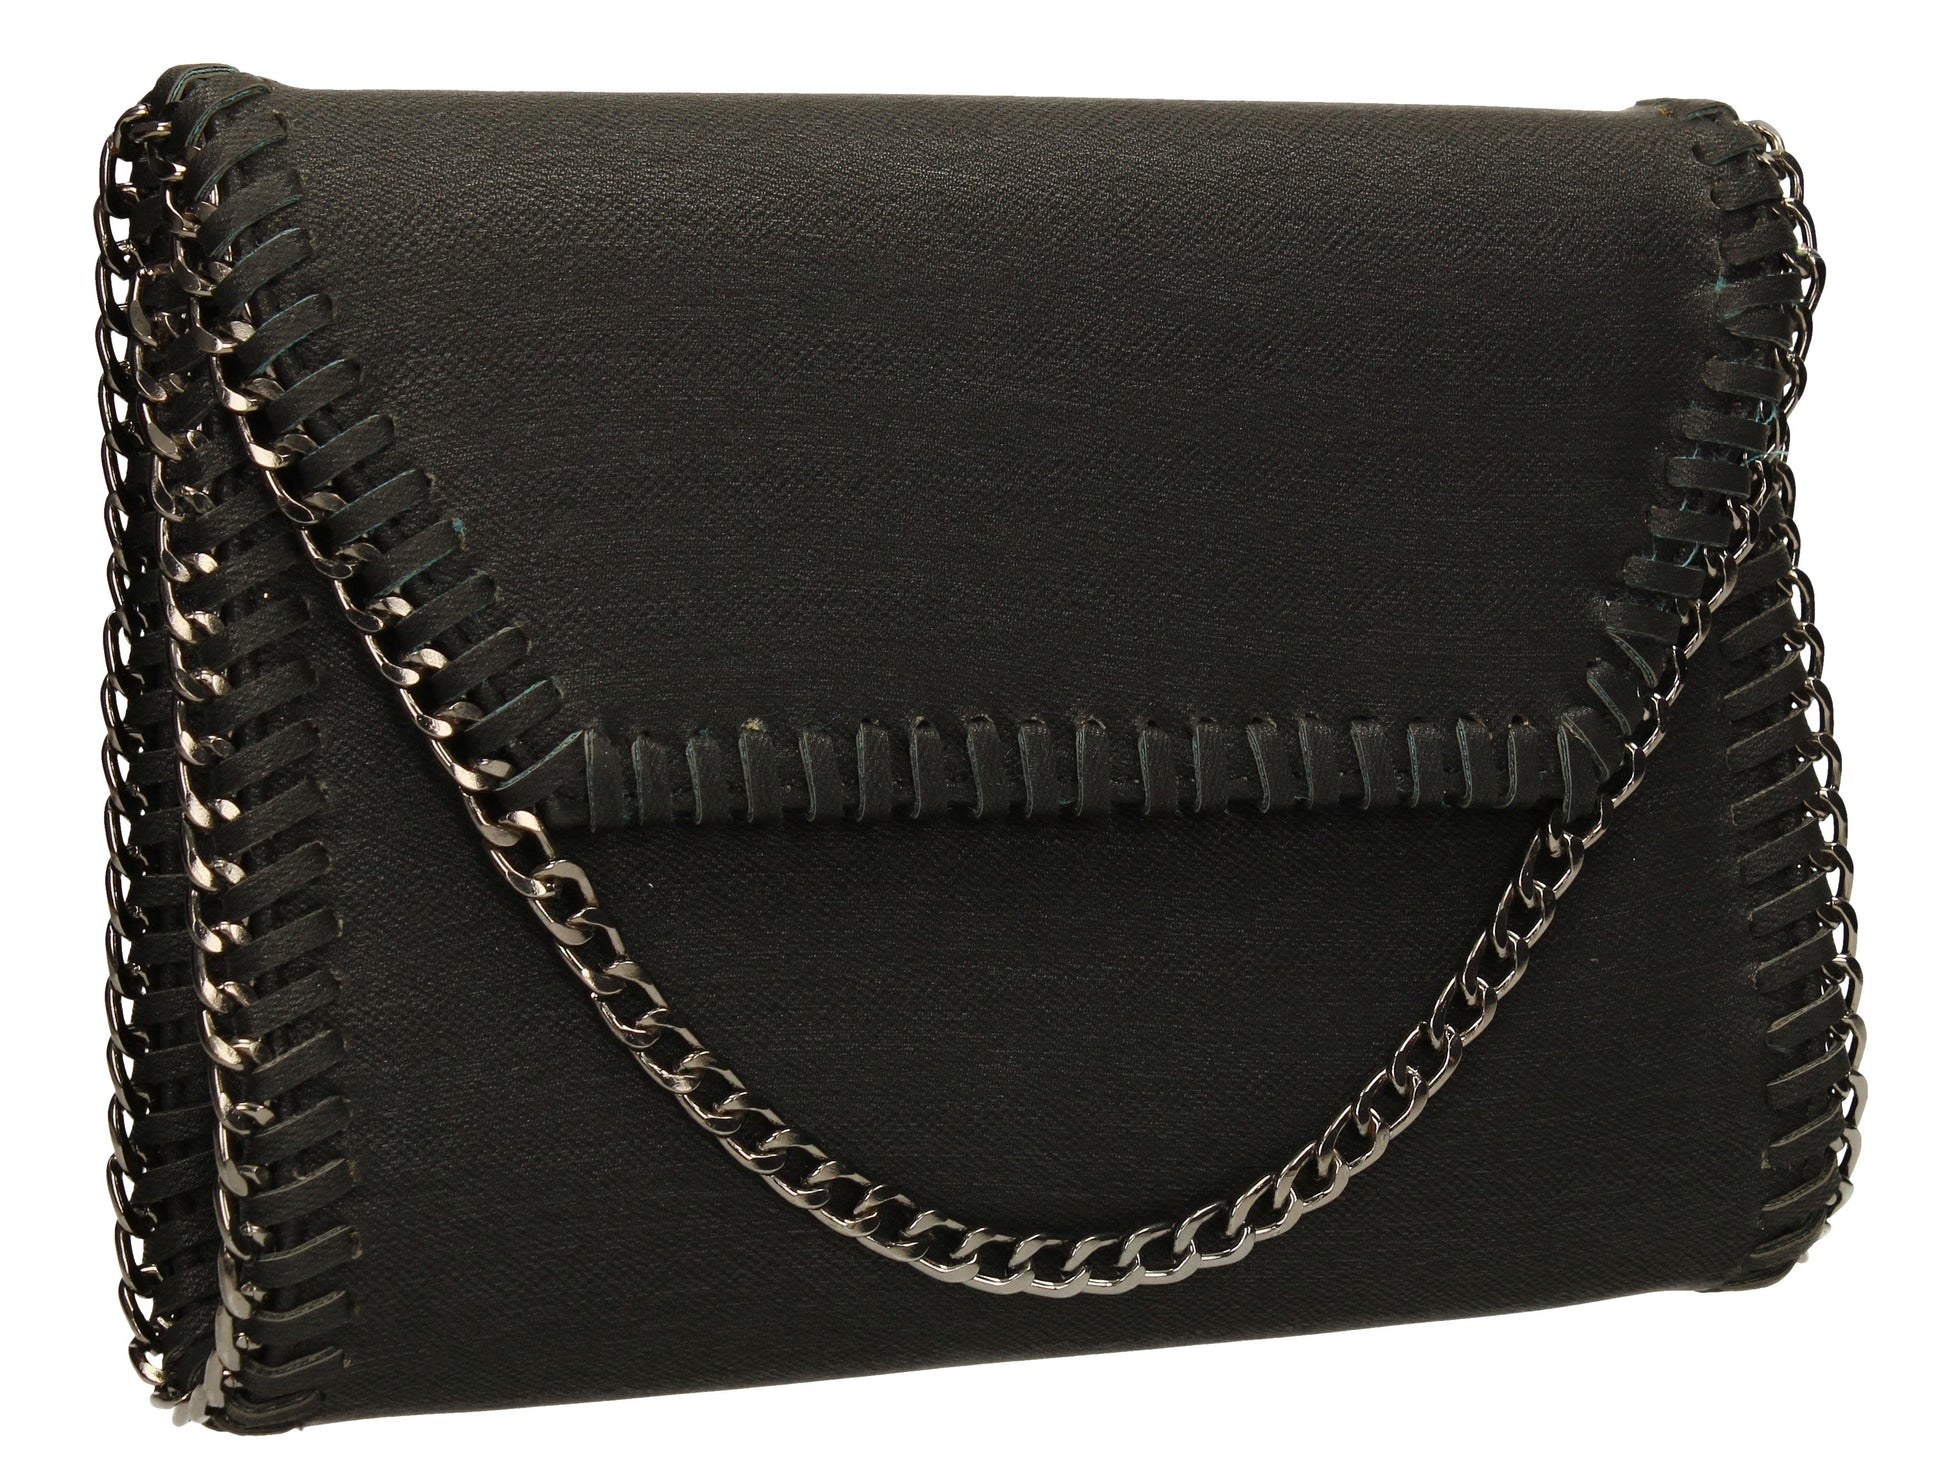 SWANKYSWANS Winona Clutch Bag Black Cute Cheap Clutch Bag For Weddings School and Work